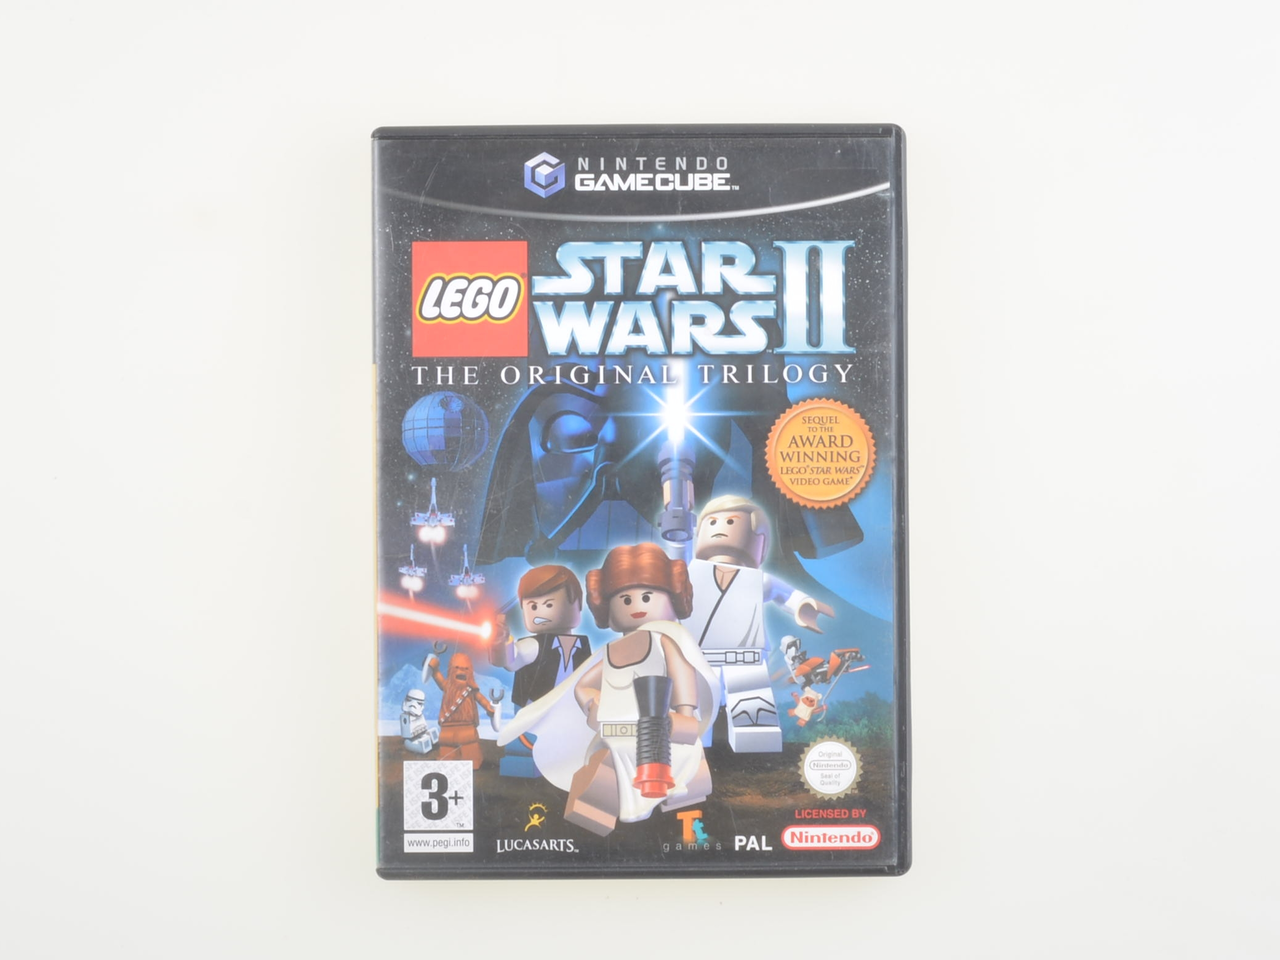 LEGO Star Wars 2 The Original Trilogy | Gamecube Games | RetroNintendoKopen.nl